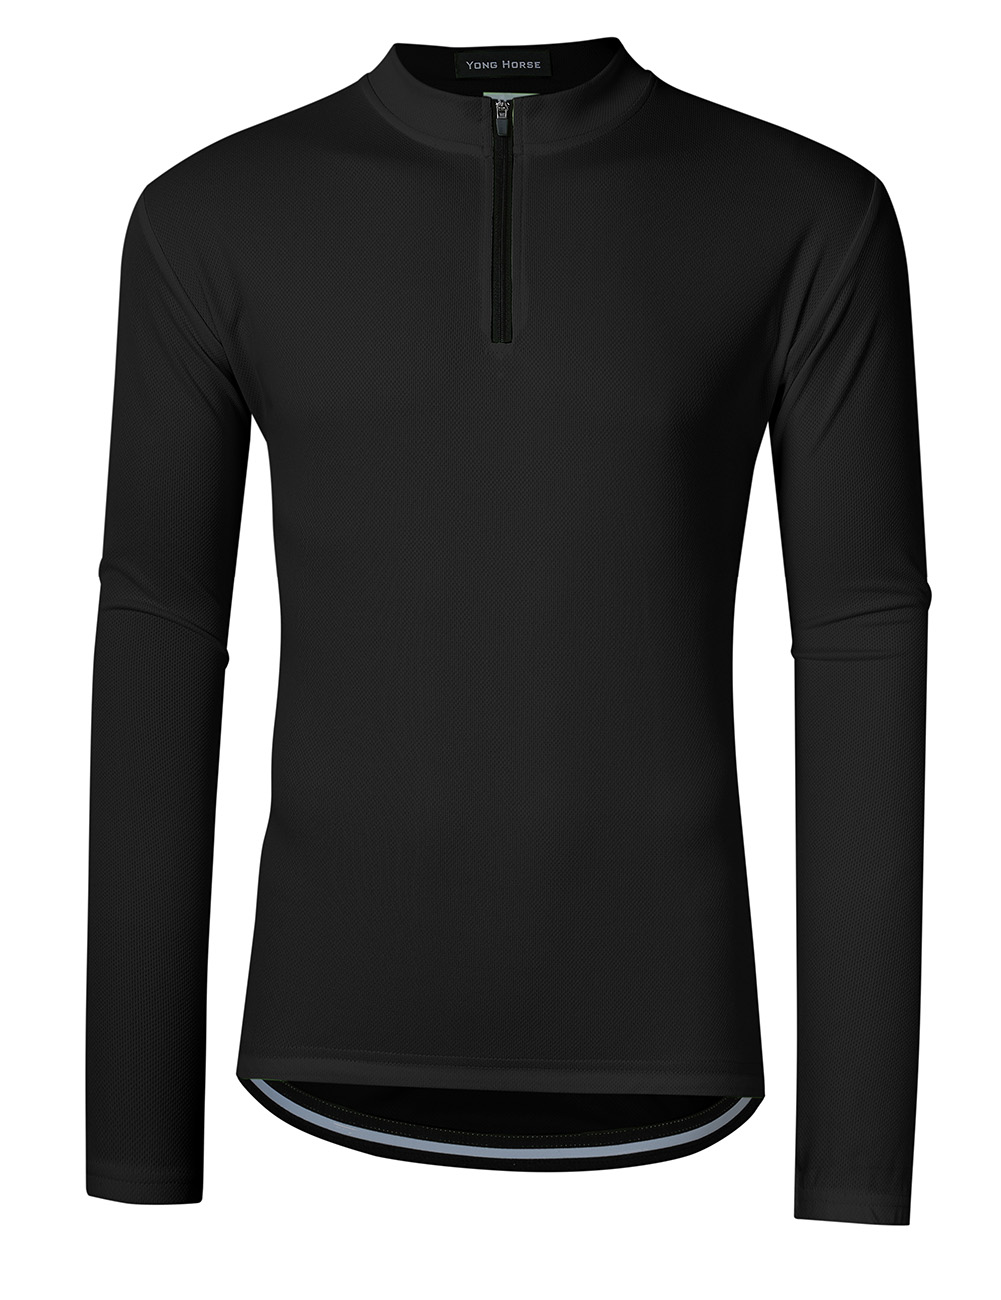 Download Men's Long Sleeve Cycling Jersey Quick Dry Bike Biking Shirt Sports Tops Black S | eBay